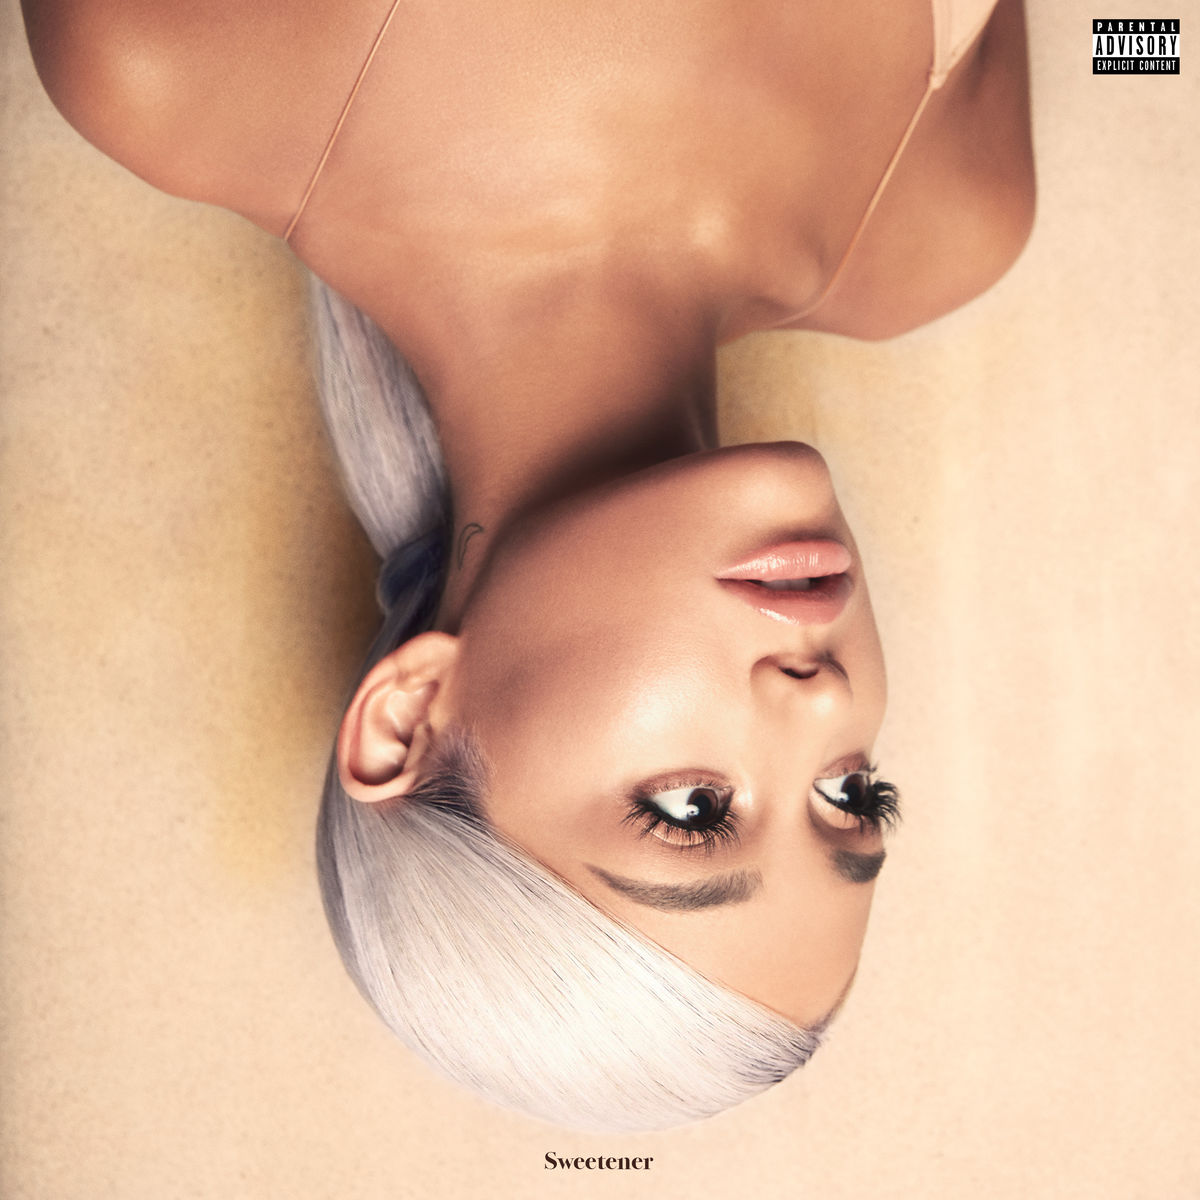 Stream Ariana Grande’s “Sweetener” Album